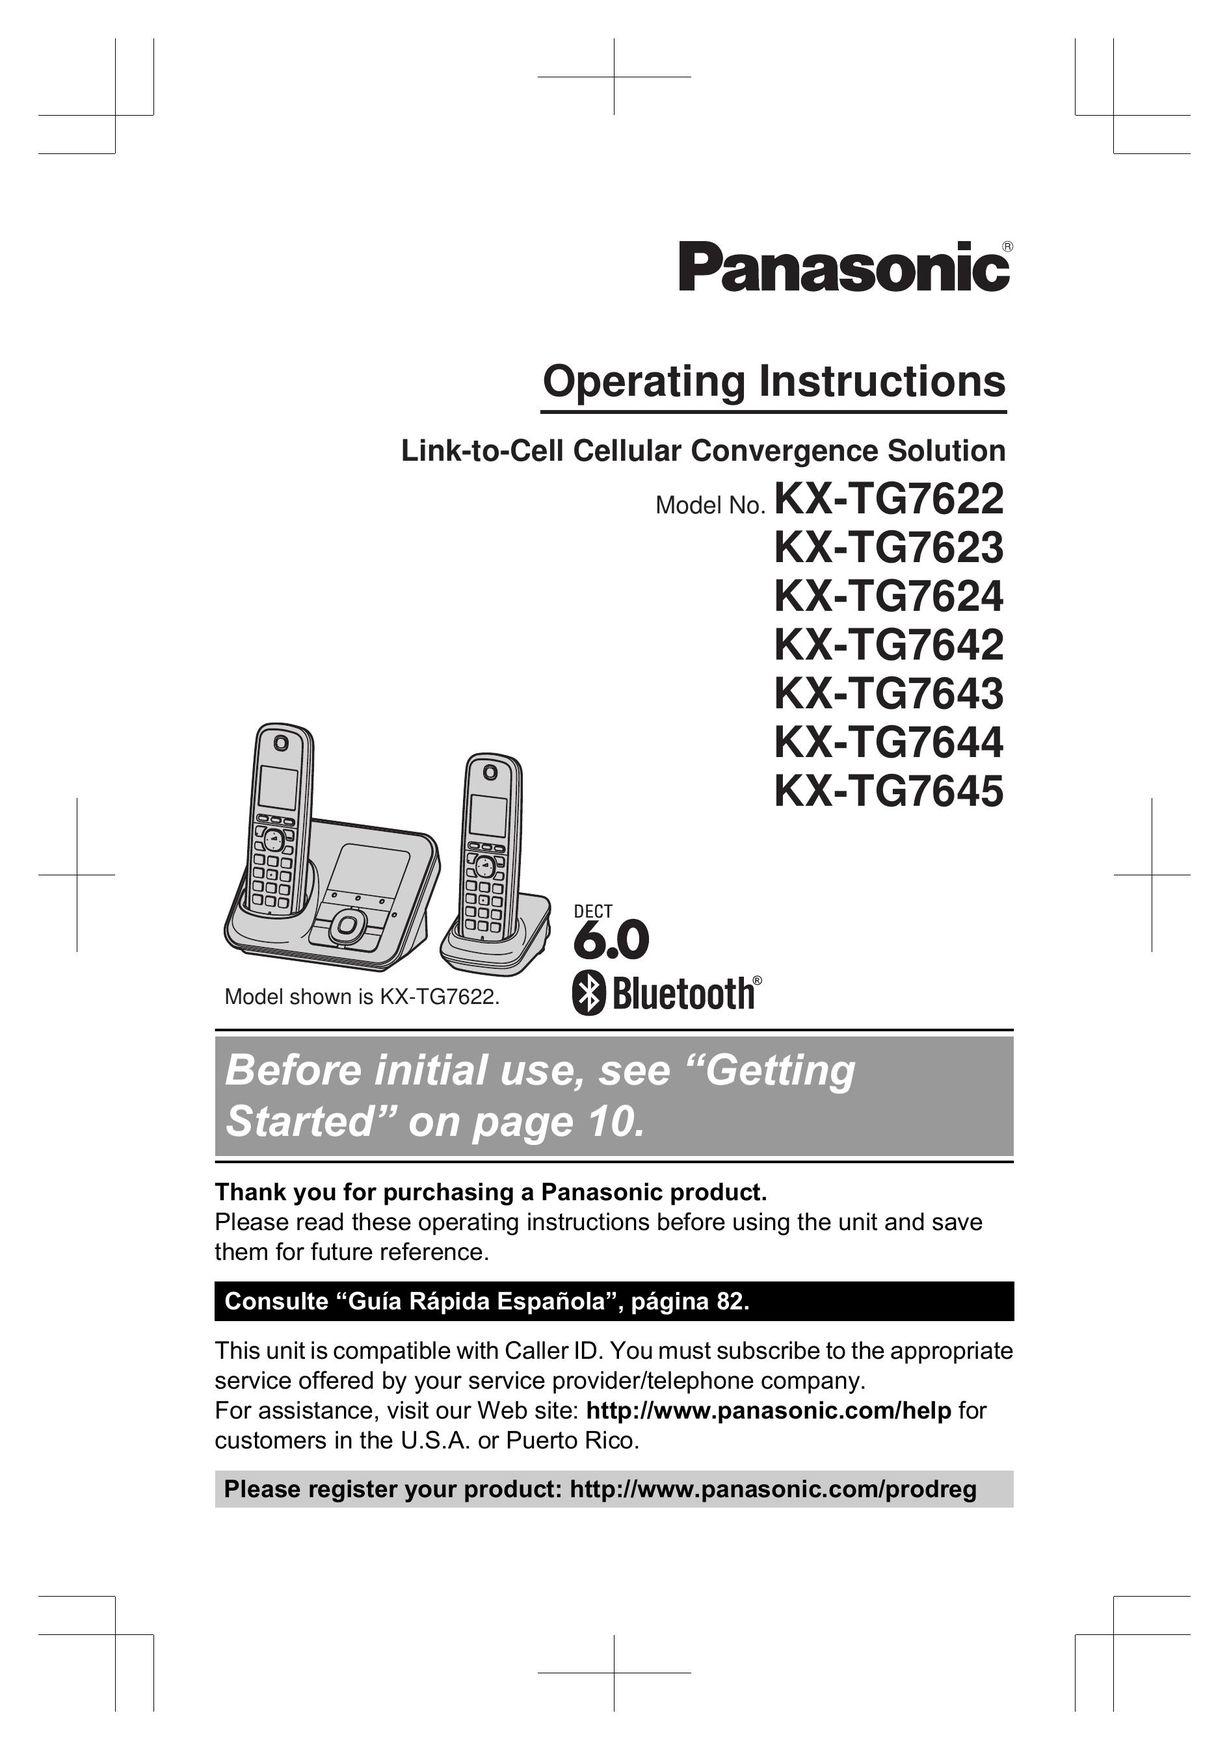 Panasonic KXTG7645M Bluetooth Headset User Manual